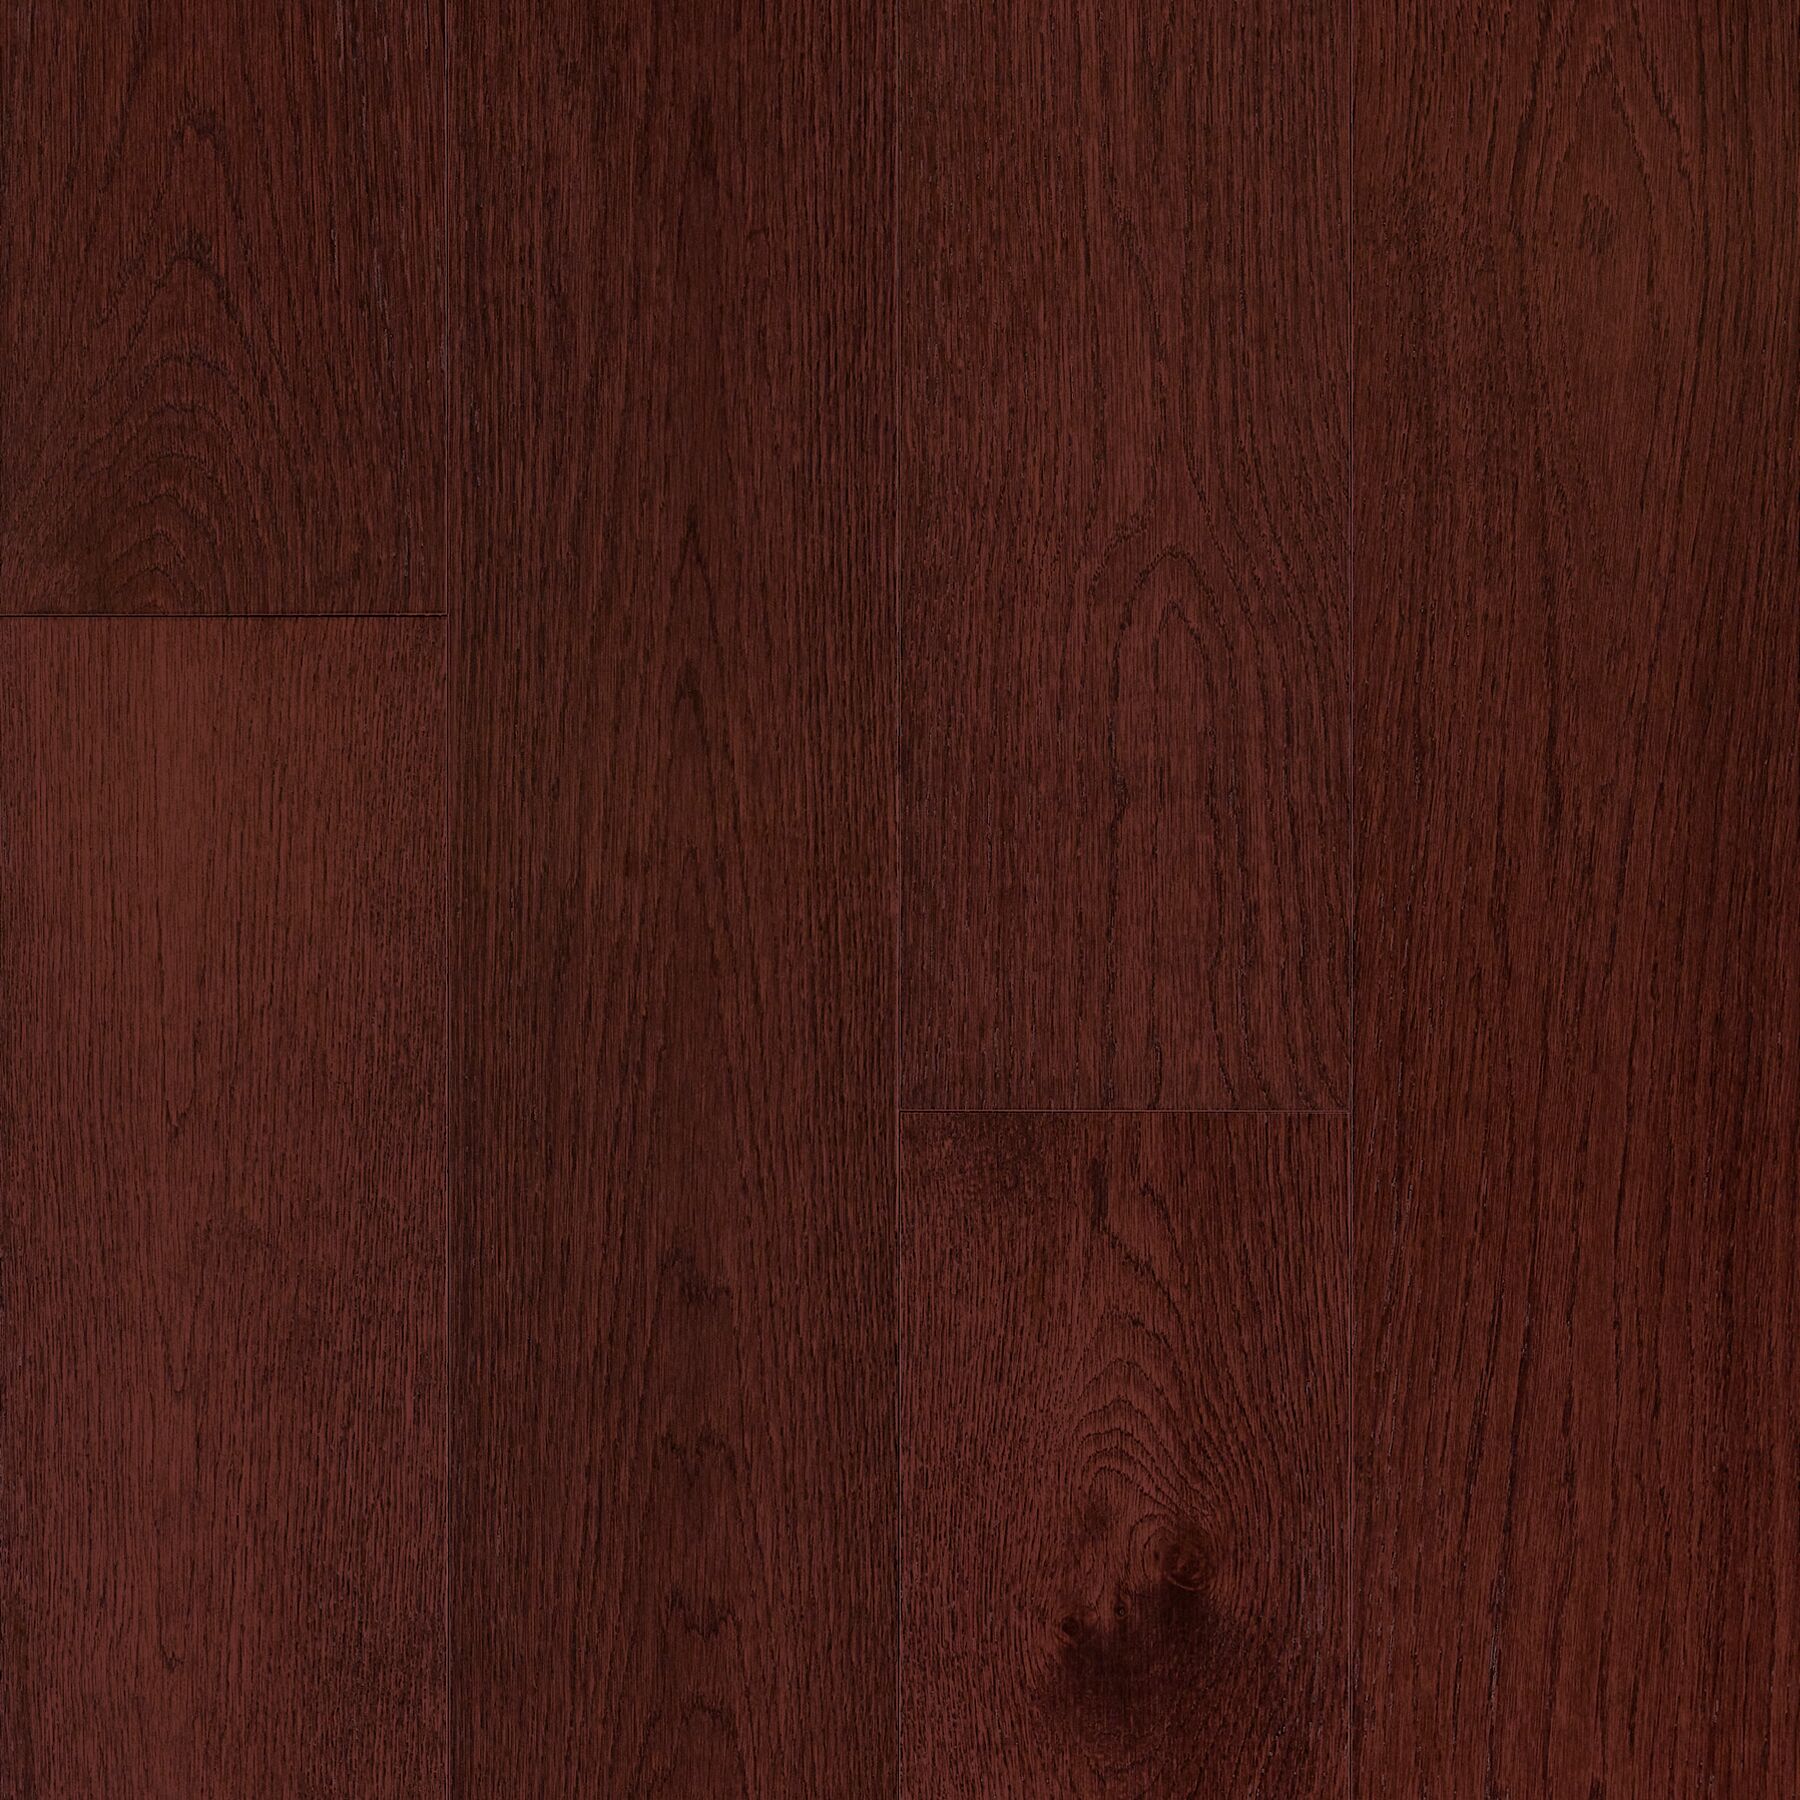 Winston Dogwood Dog-Friendly Wood Flooring with Densified Wood